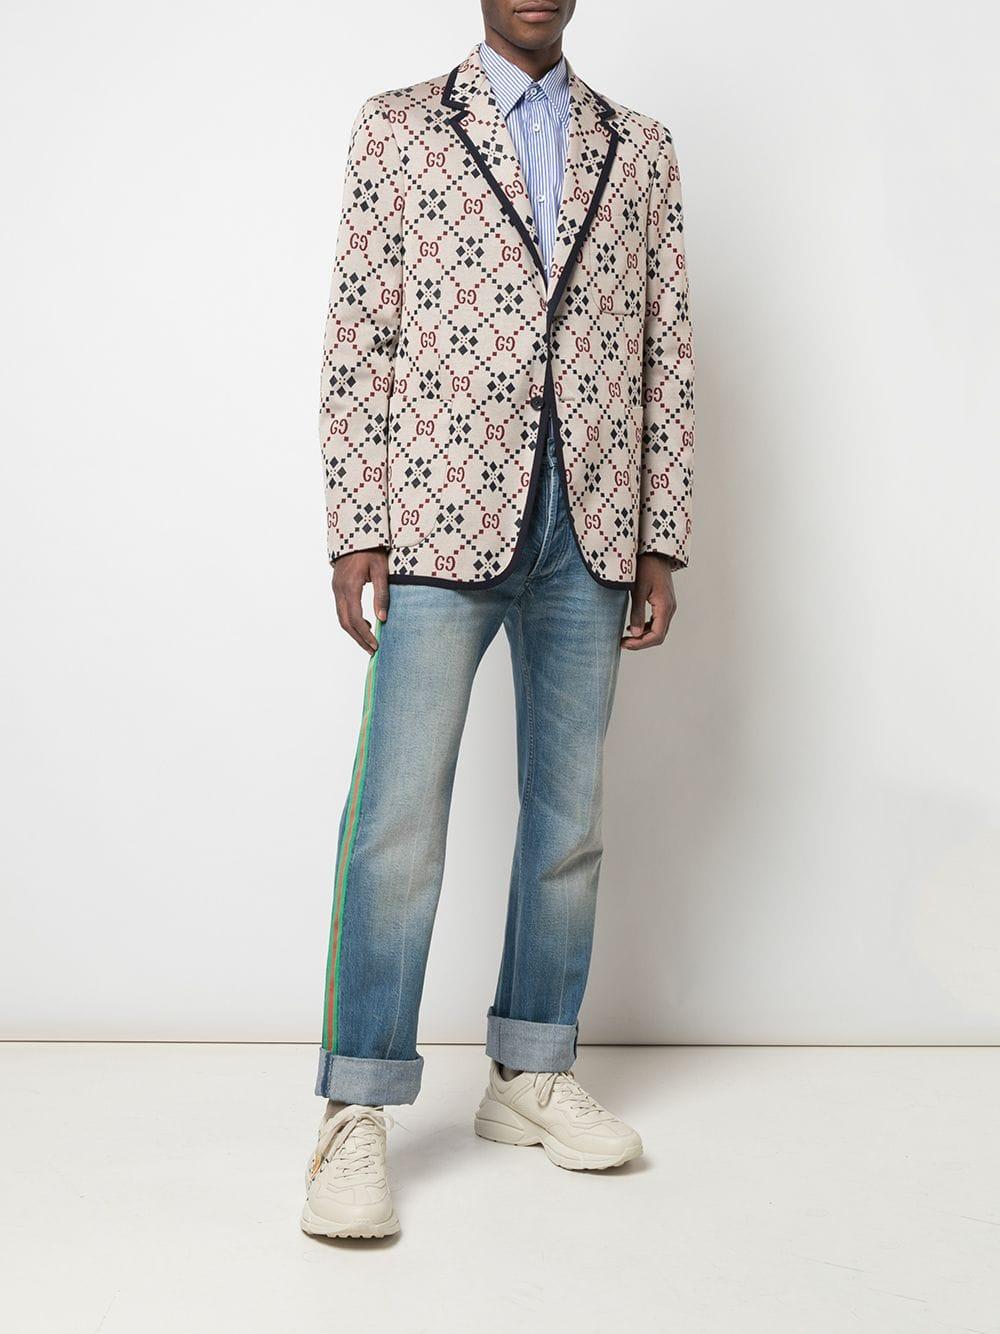 Gucci Cotton GG Pattern Blazer in White for Men - Lyst